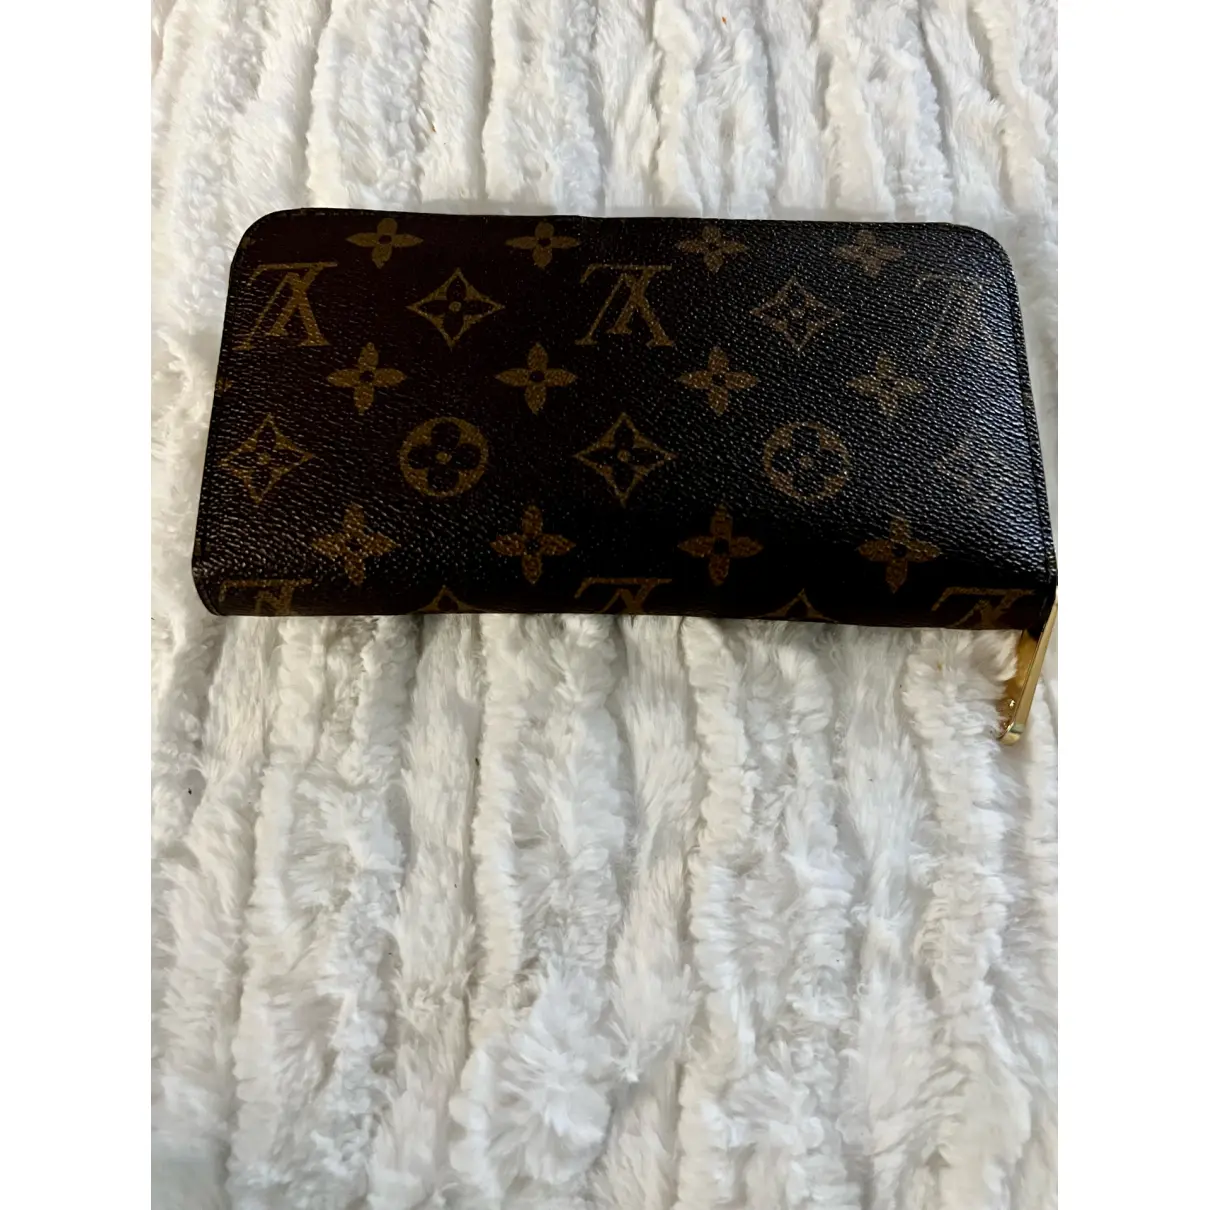 Buy Louis Vuitton Zippy leather wallet online - Vintage